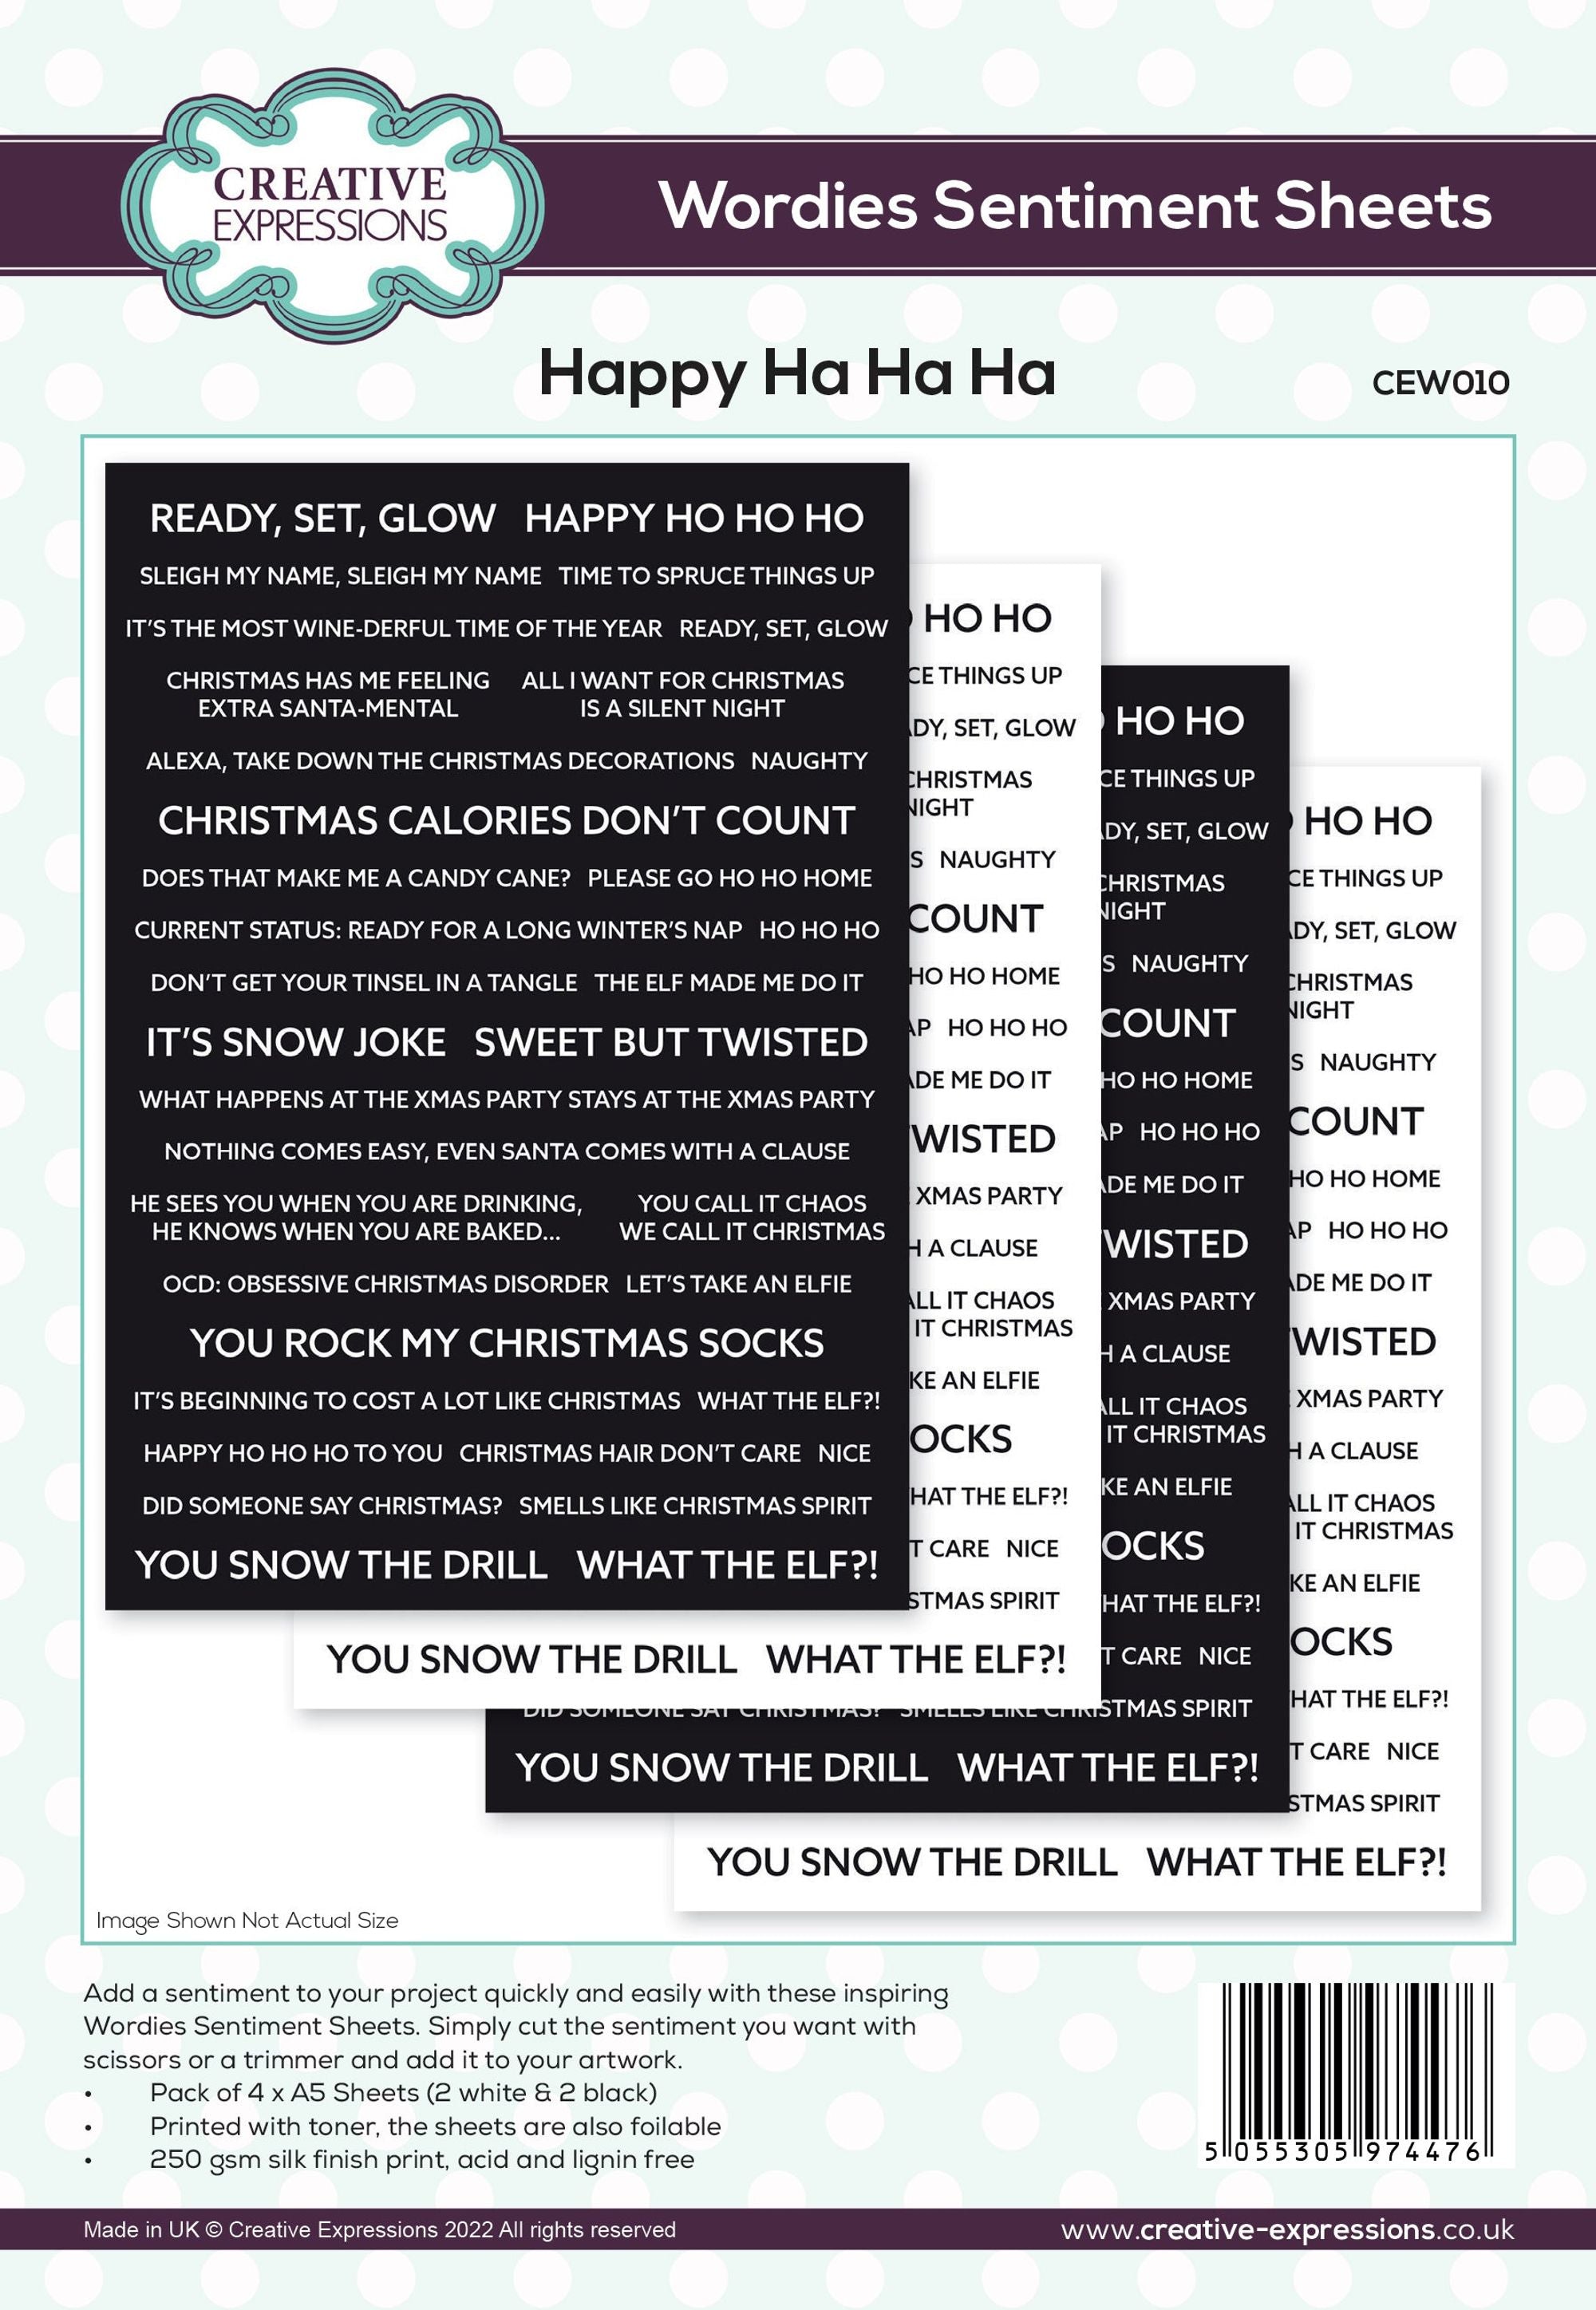 Creative Expressions Wordies Sentiment Sheets - Happy Ha Ha Ha Pk 4 6 in x 8 in